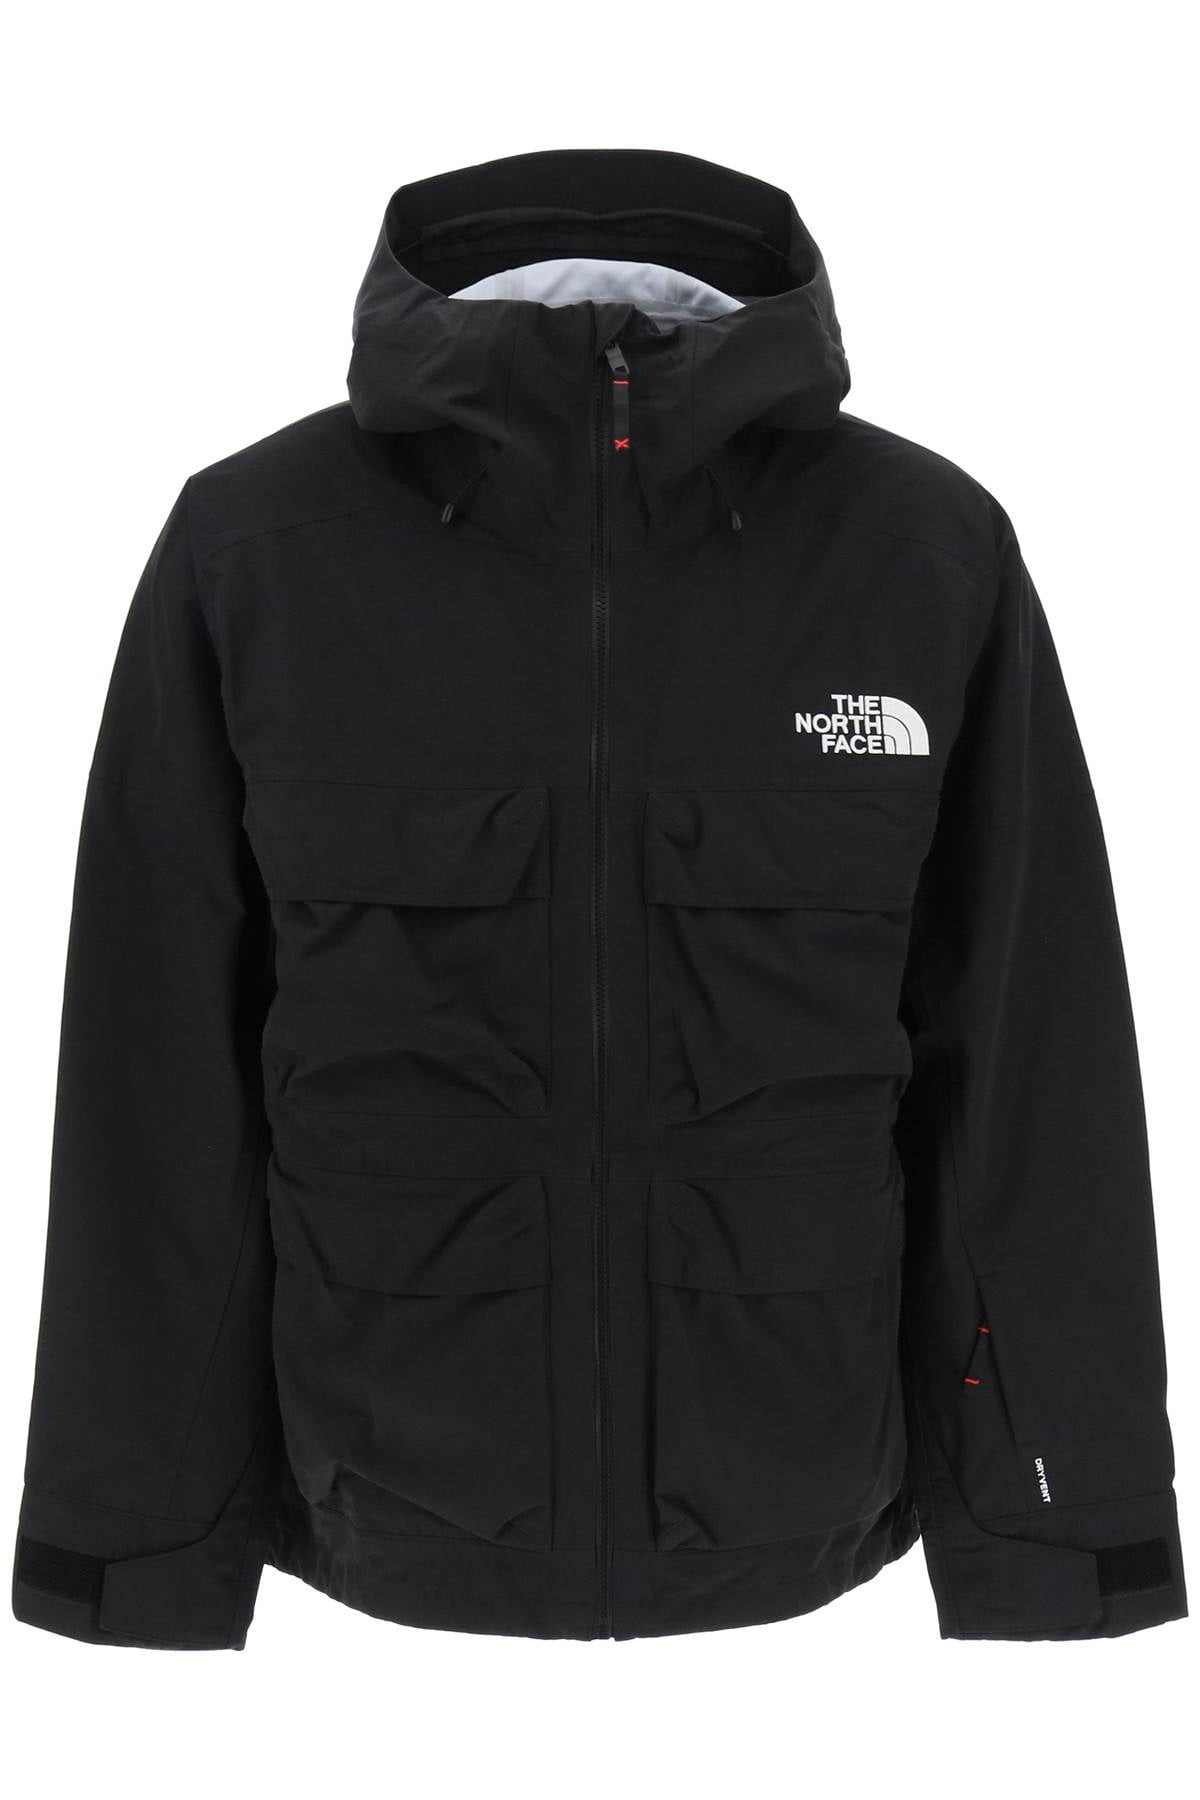 The North Face Dragline Ski Jacket Men - Walmart.com